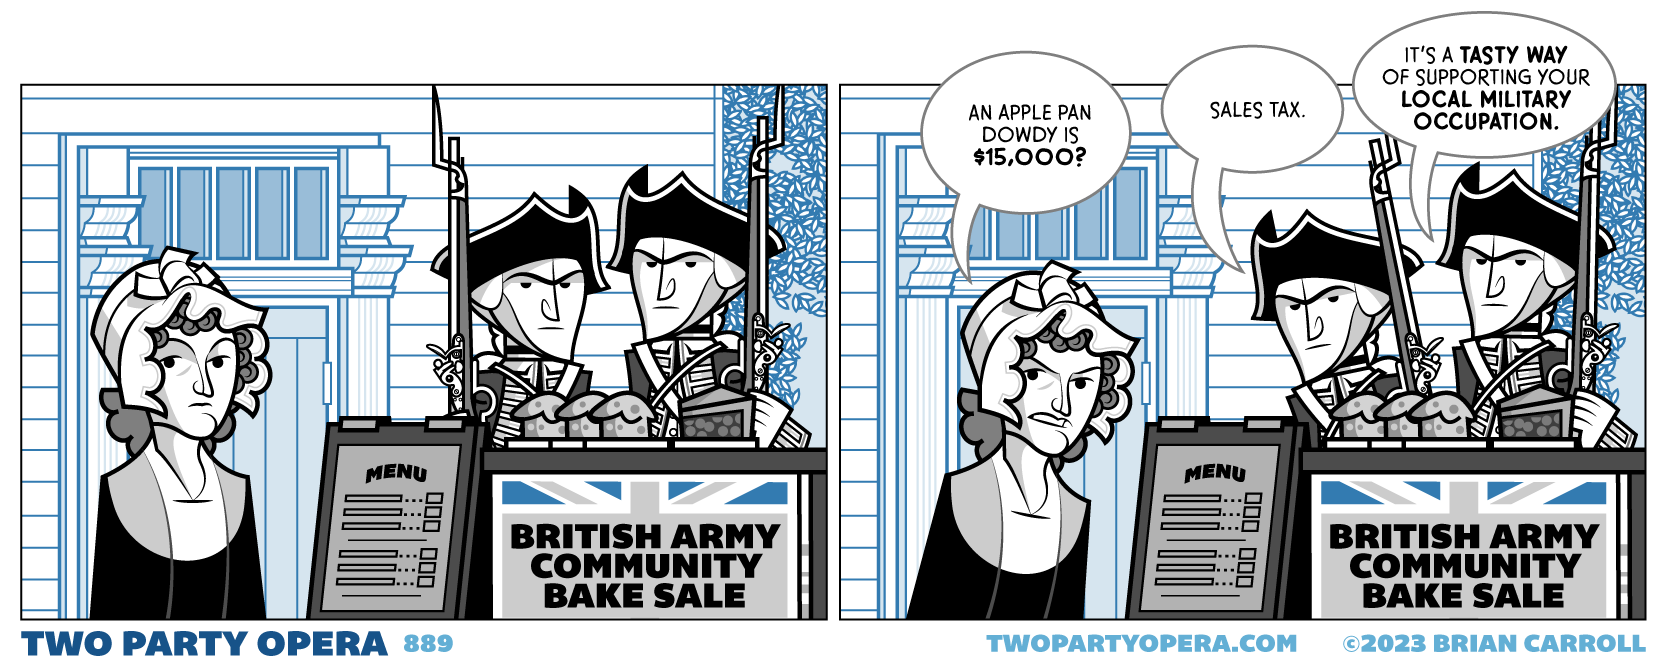 British Army Community Bake Sale